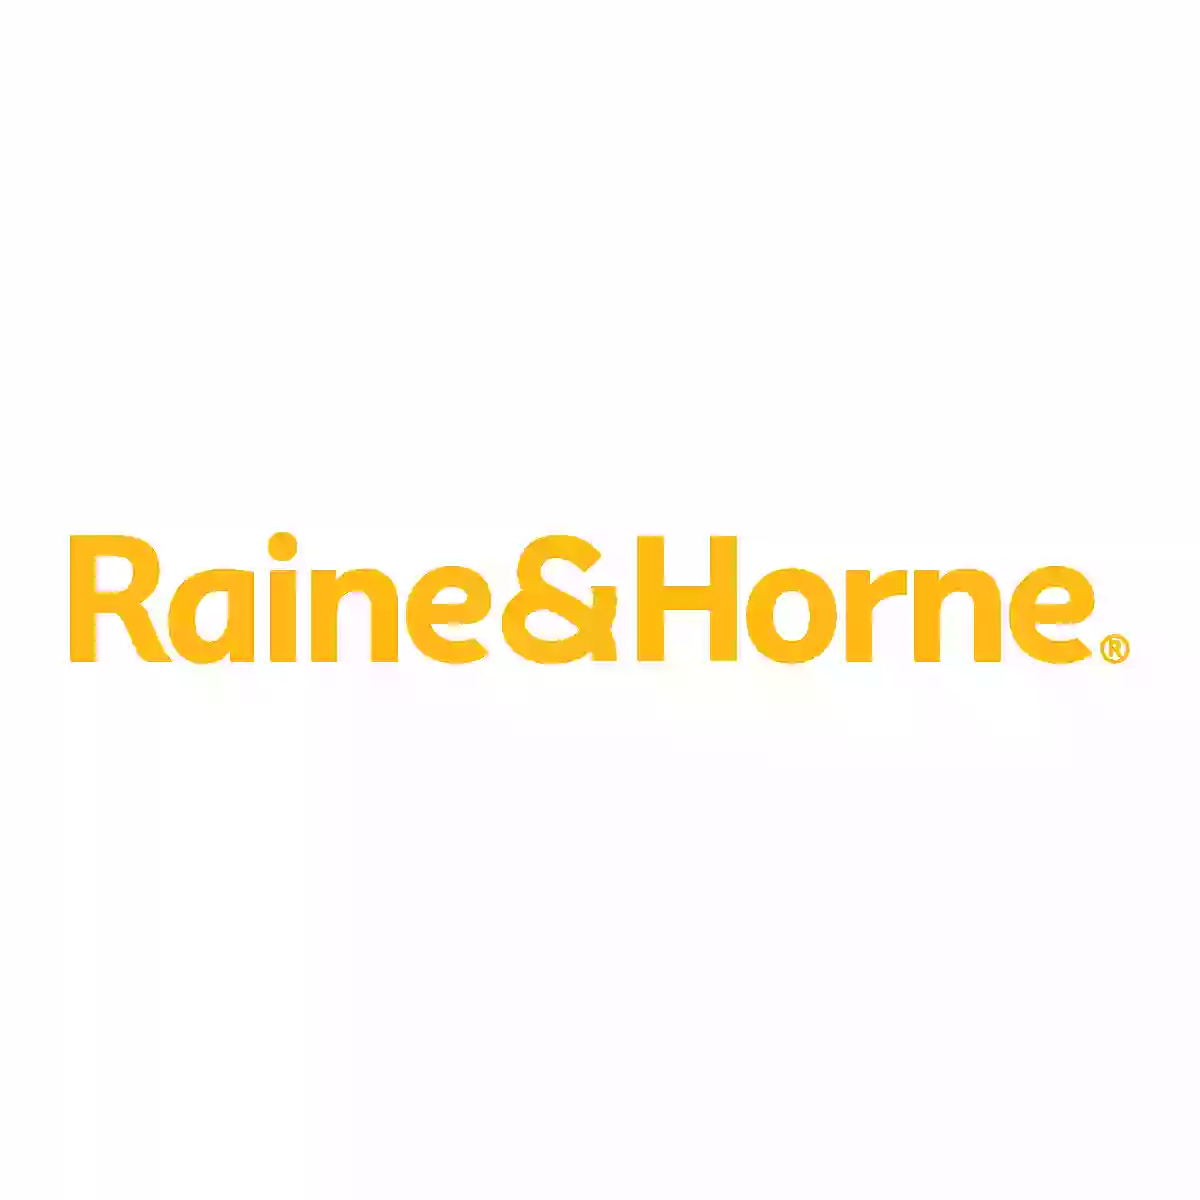 Raine & Horne Cameron Park Real Estate Agents